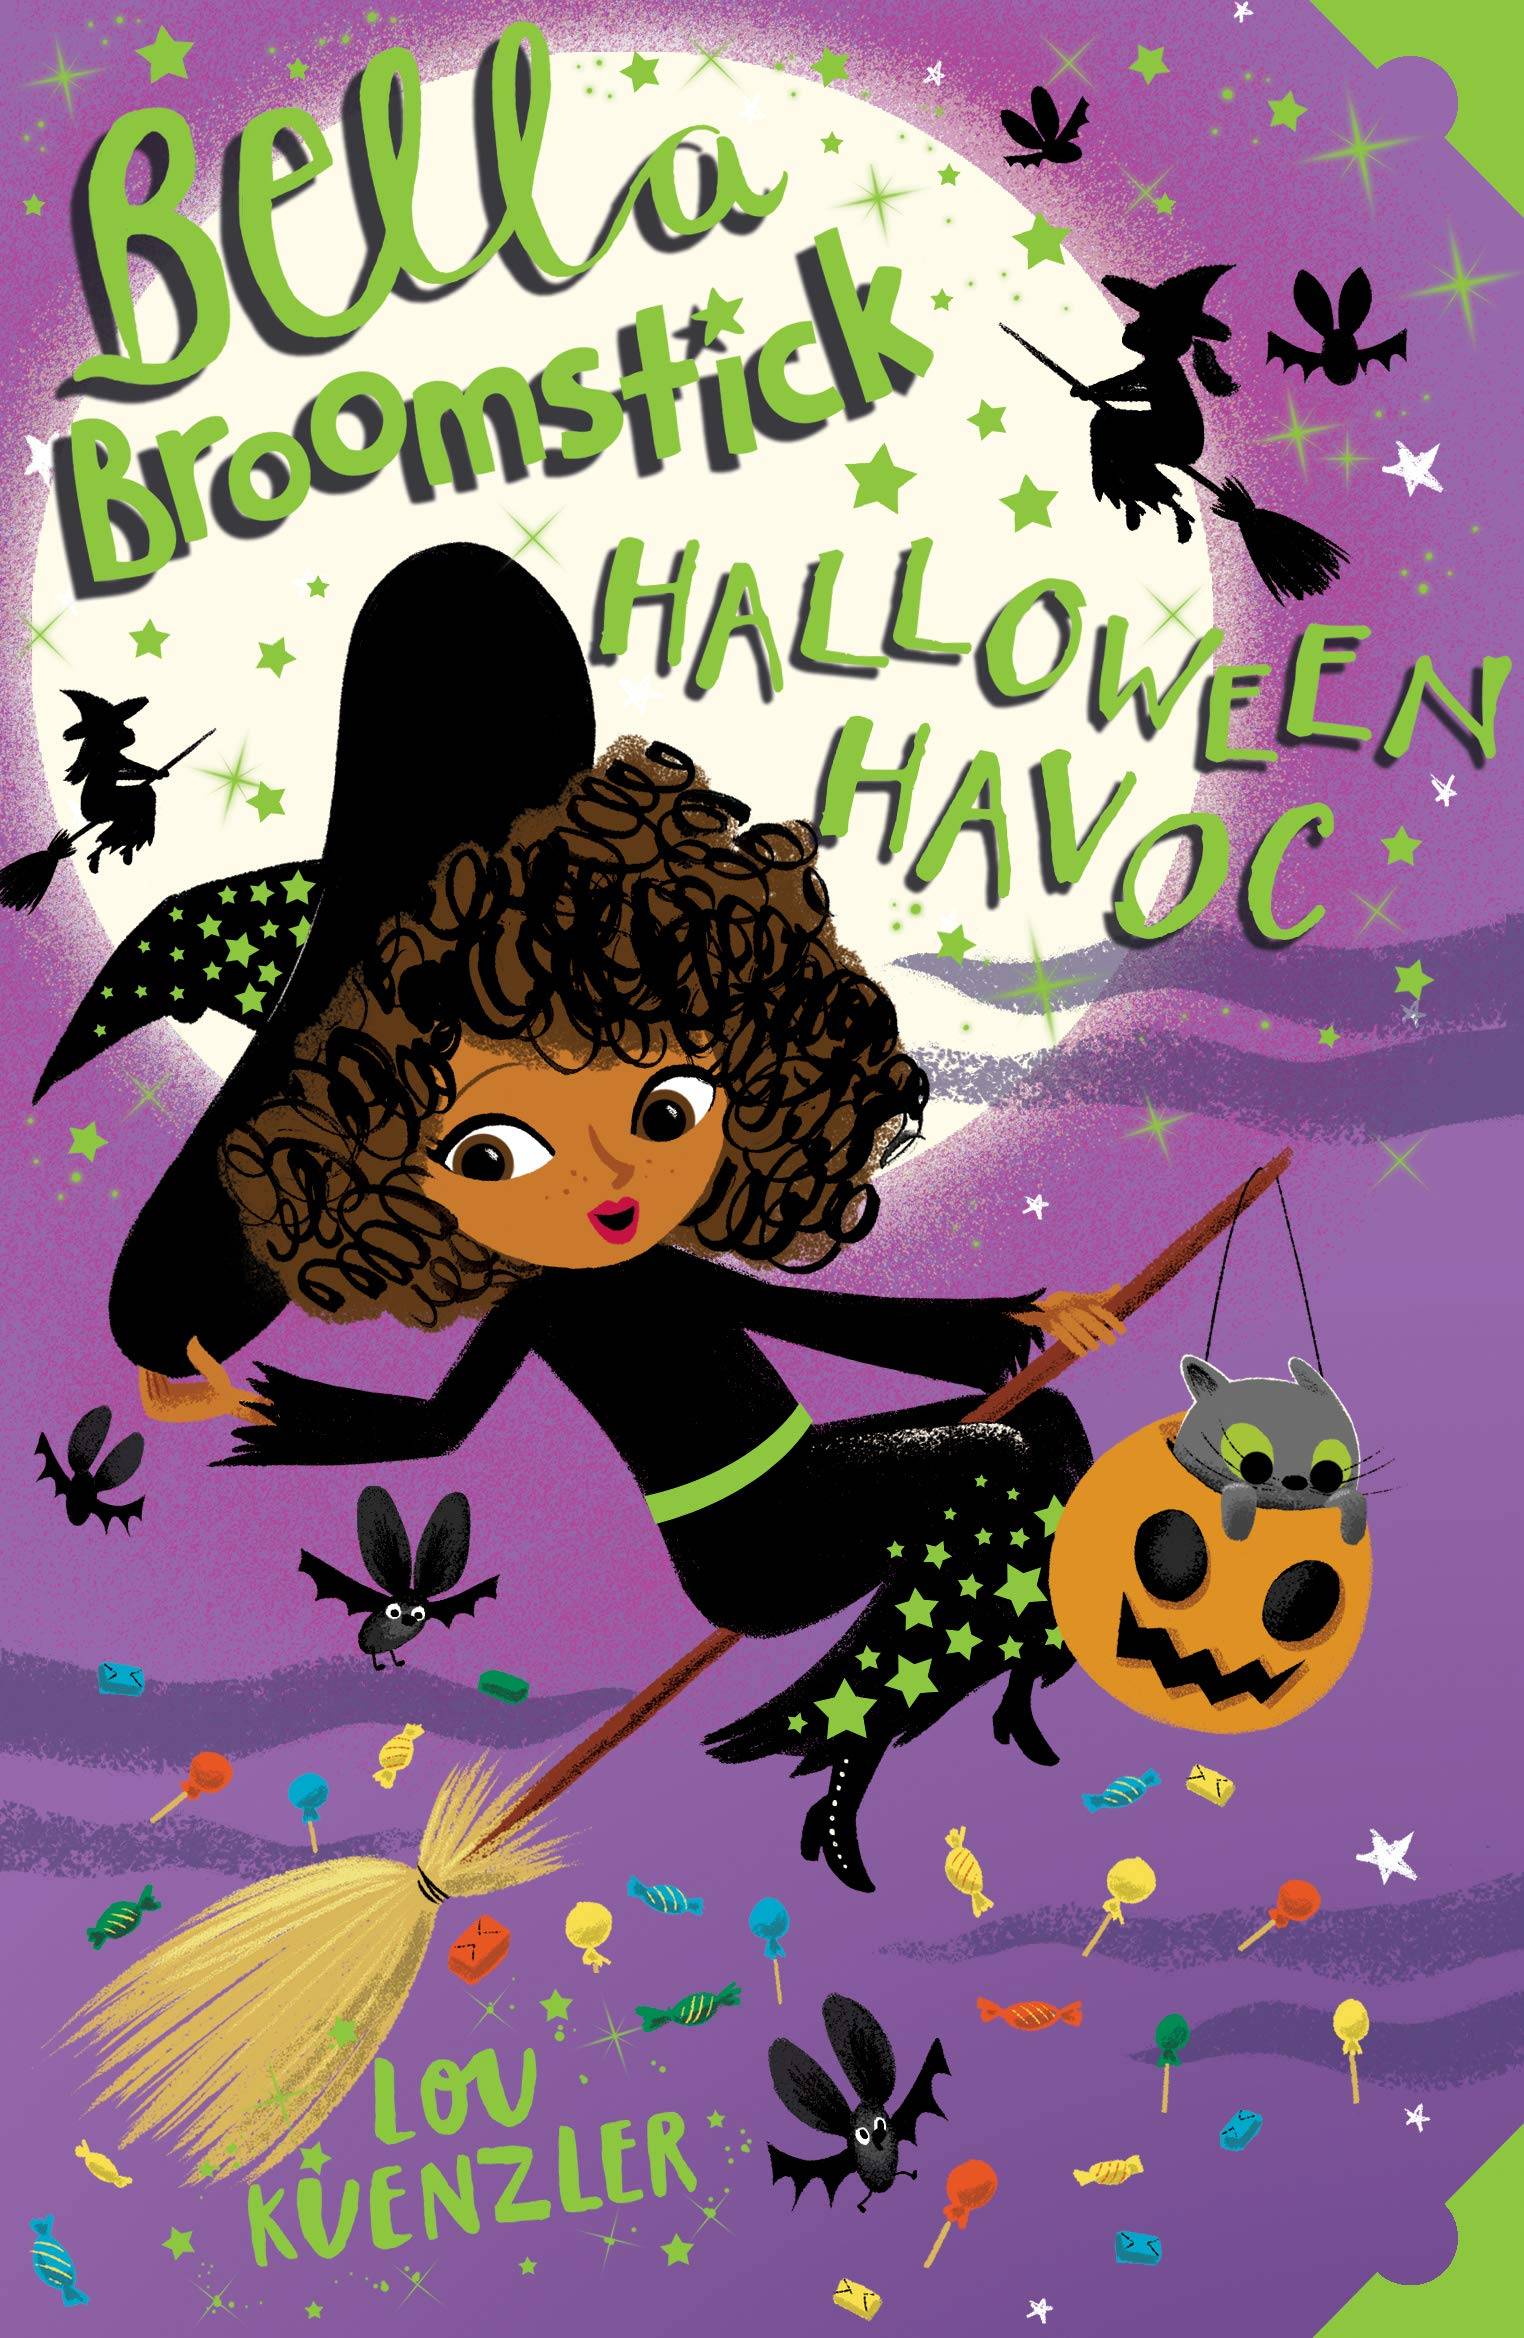 IMG : Bella Broomstick Halloween Havoc